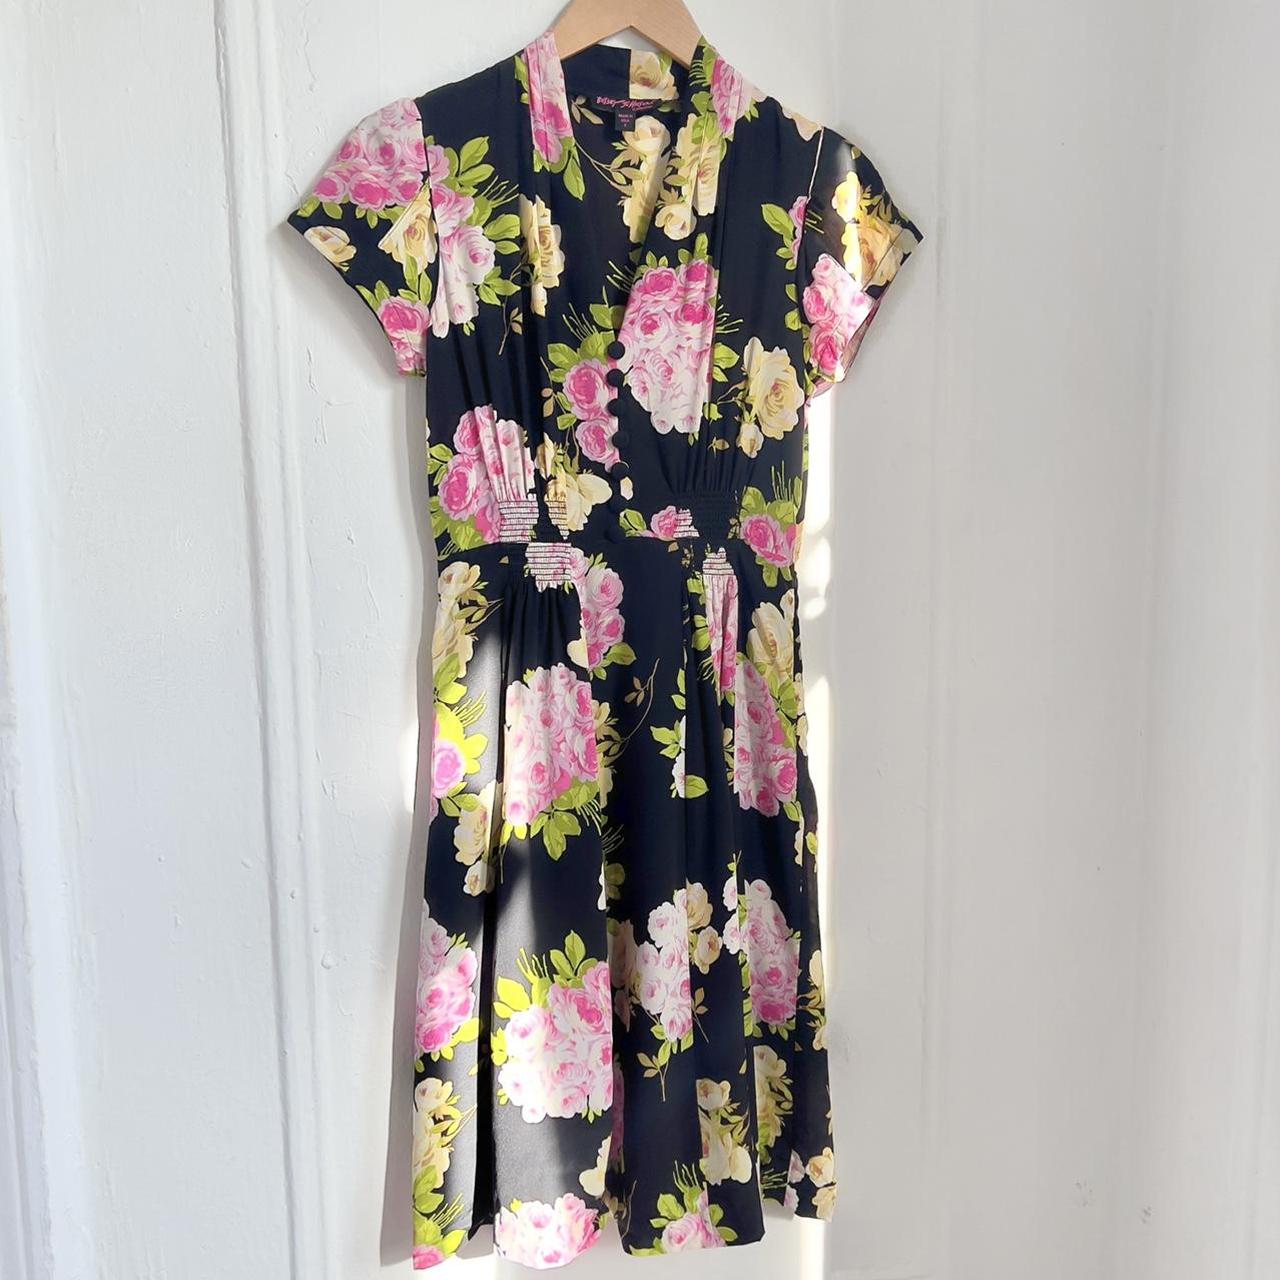 Vintage Betsey Johnson 100% silk floral dress. A... - Depop